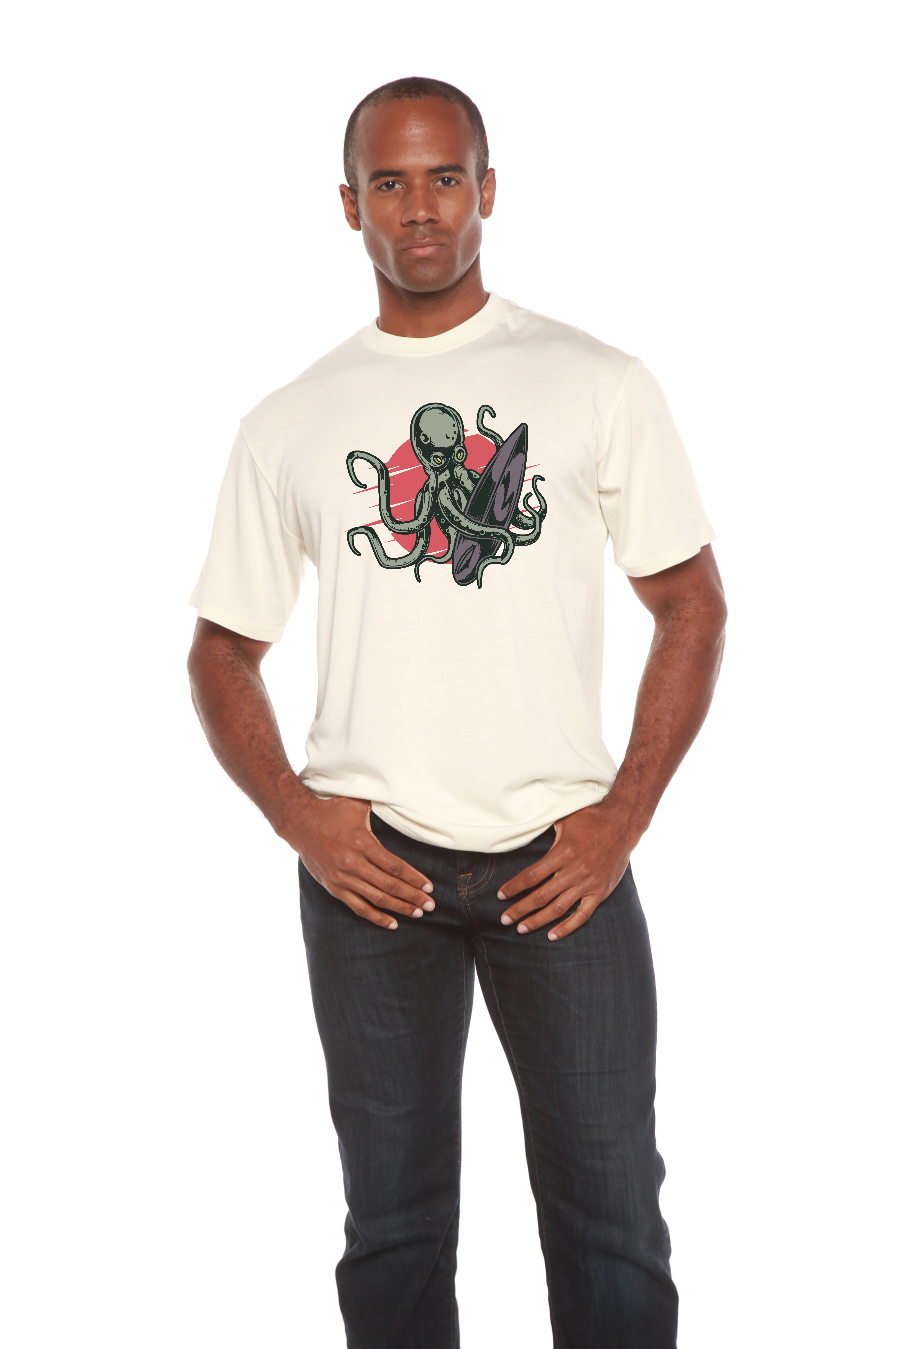 Octopus Men's Bamboo Viscose/Organic Cotton Short Sleeve T-Shirt - Spun Bamboo